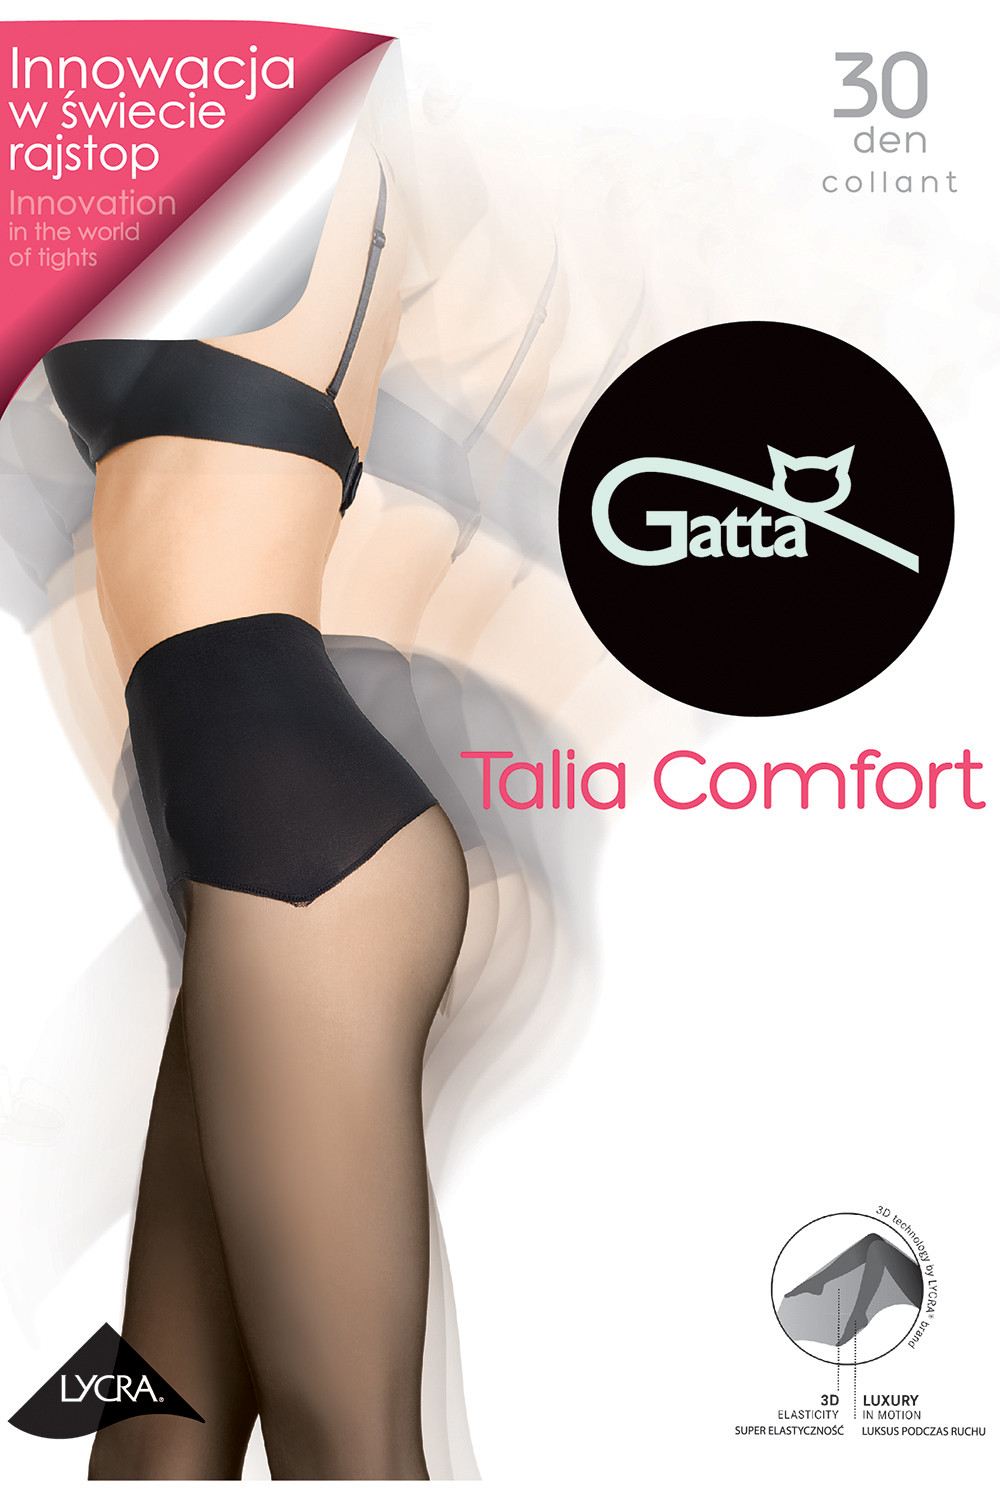 Gatta Talia Comfort kolor:nero 3-4